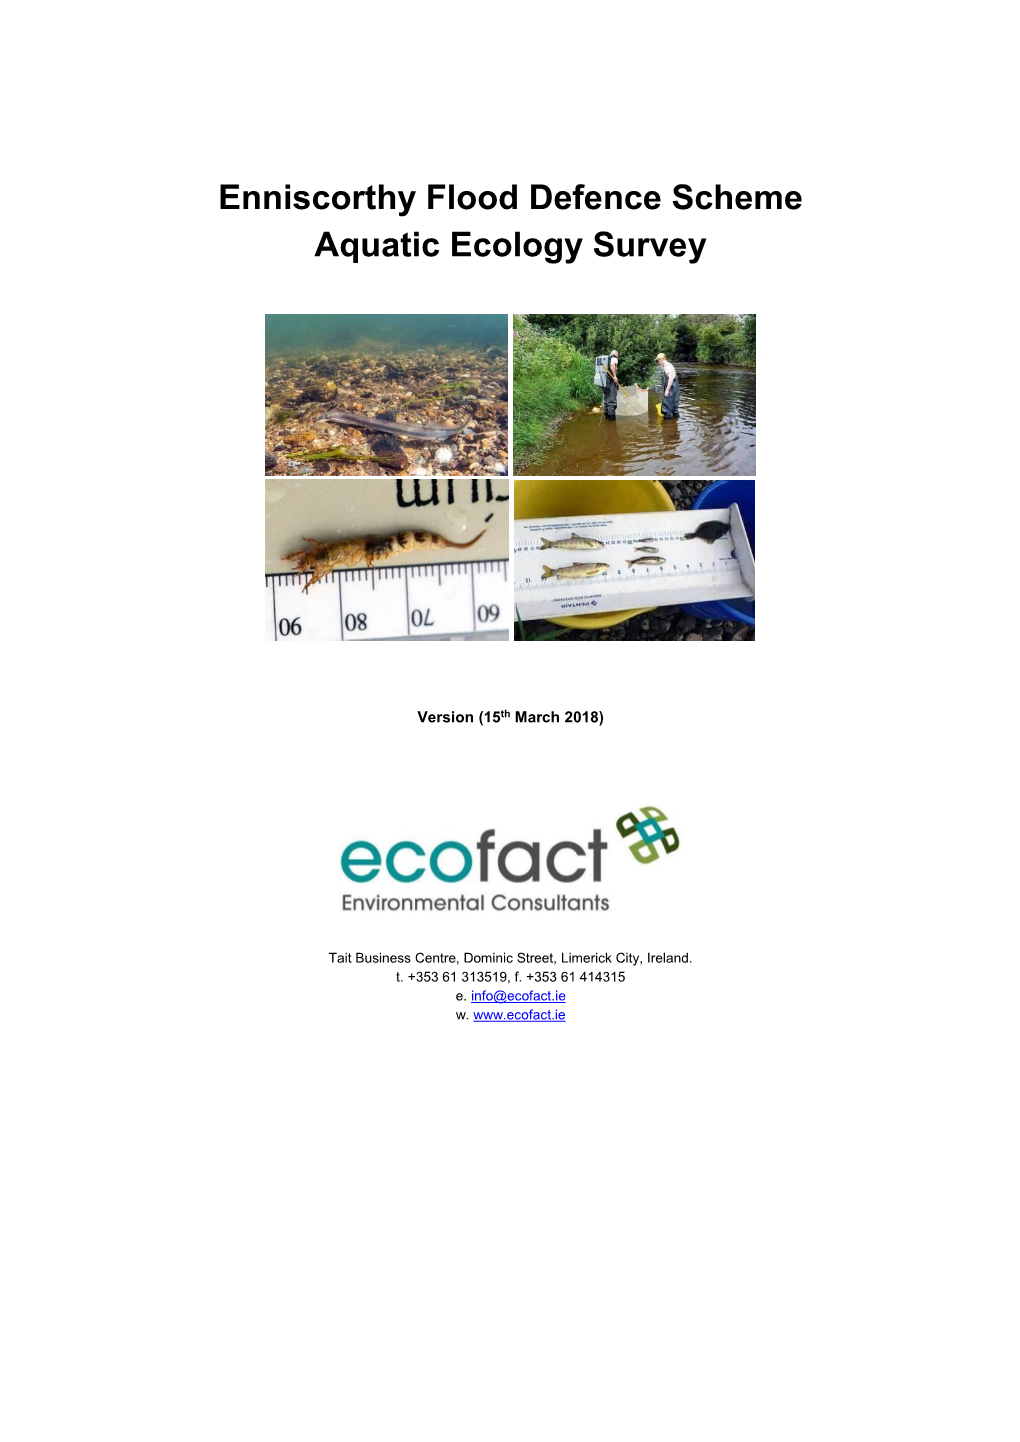 Enniscorthy Flood Defence Scheme Aquatic Ecology Survey